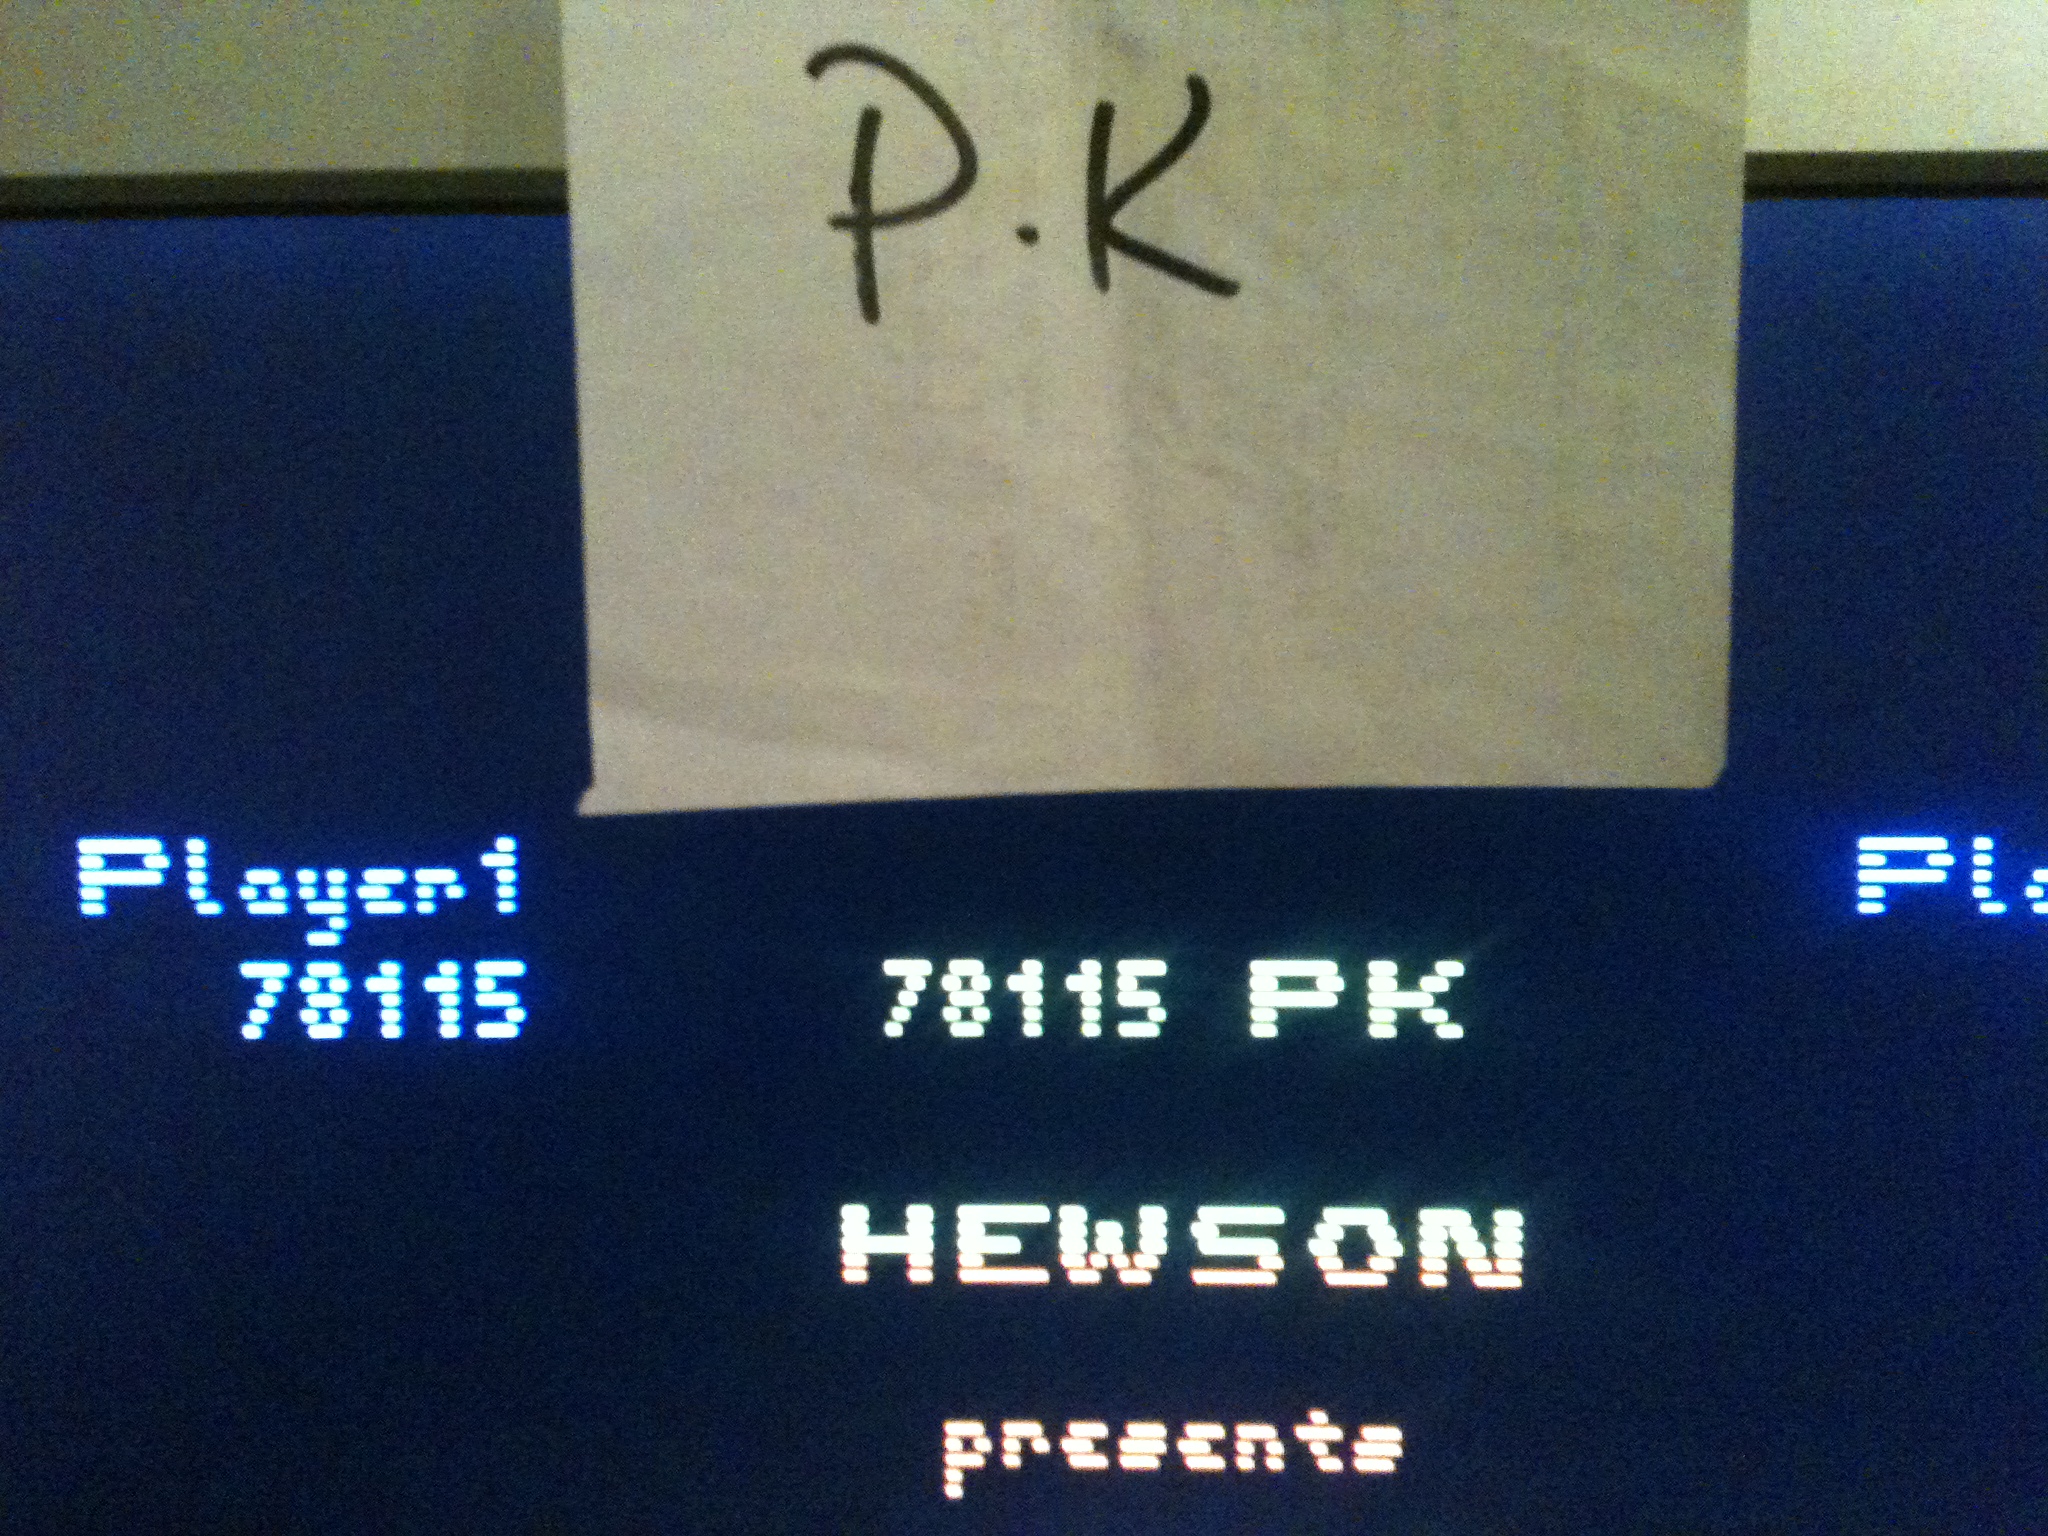 kernzy: Uridium (Atari ST Emulated) 78,115 points on 2015-03-25 14:45:28